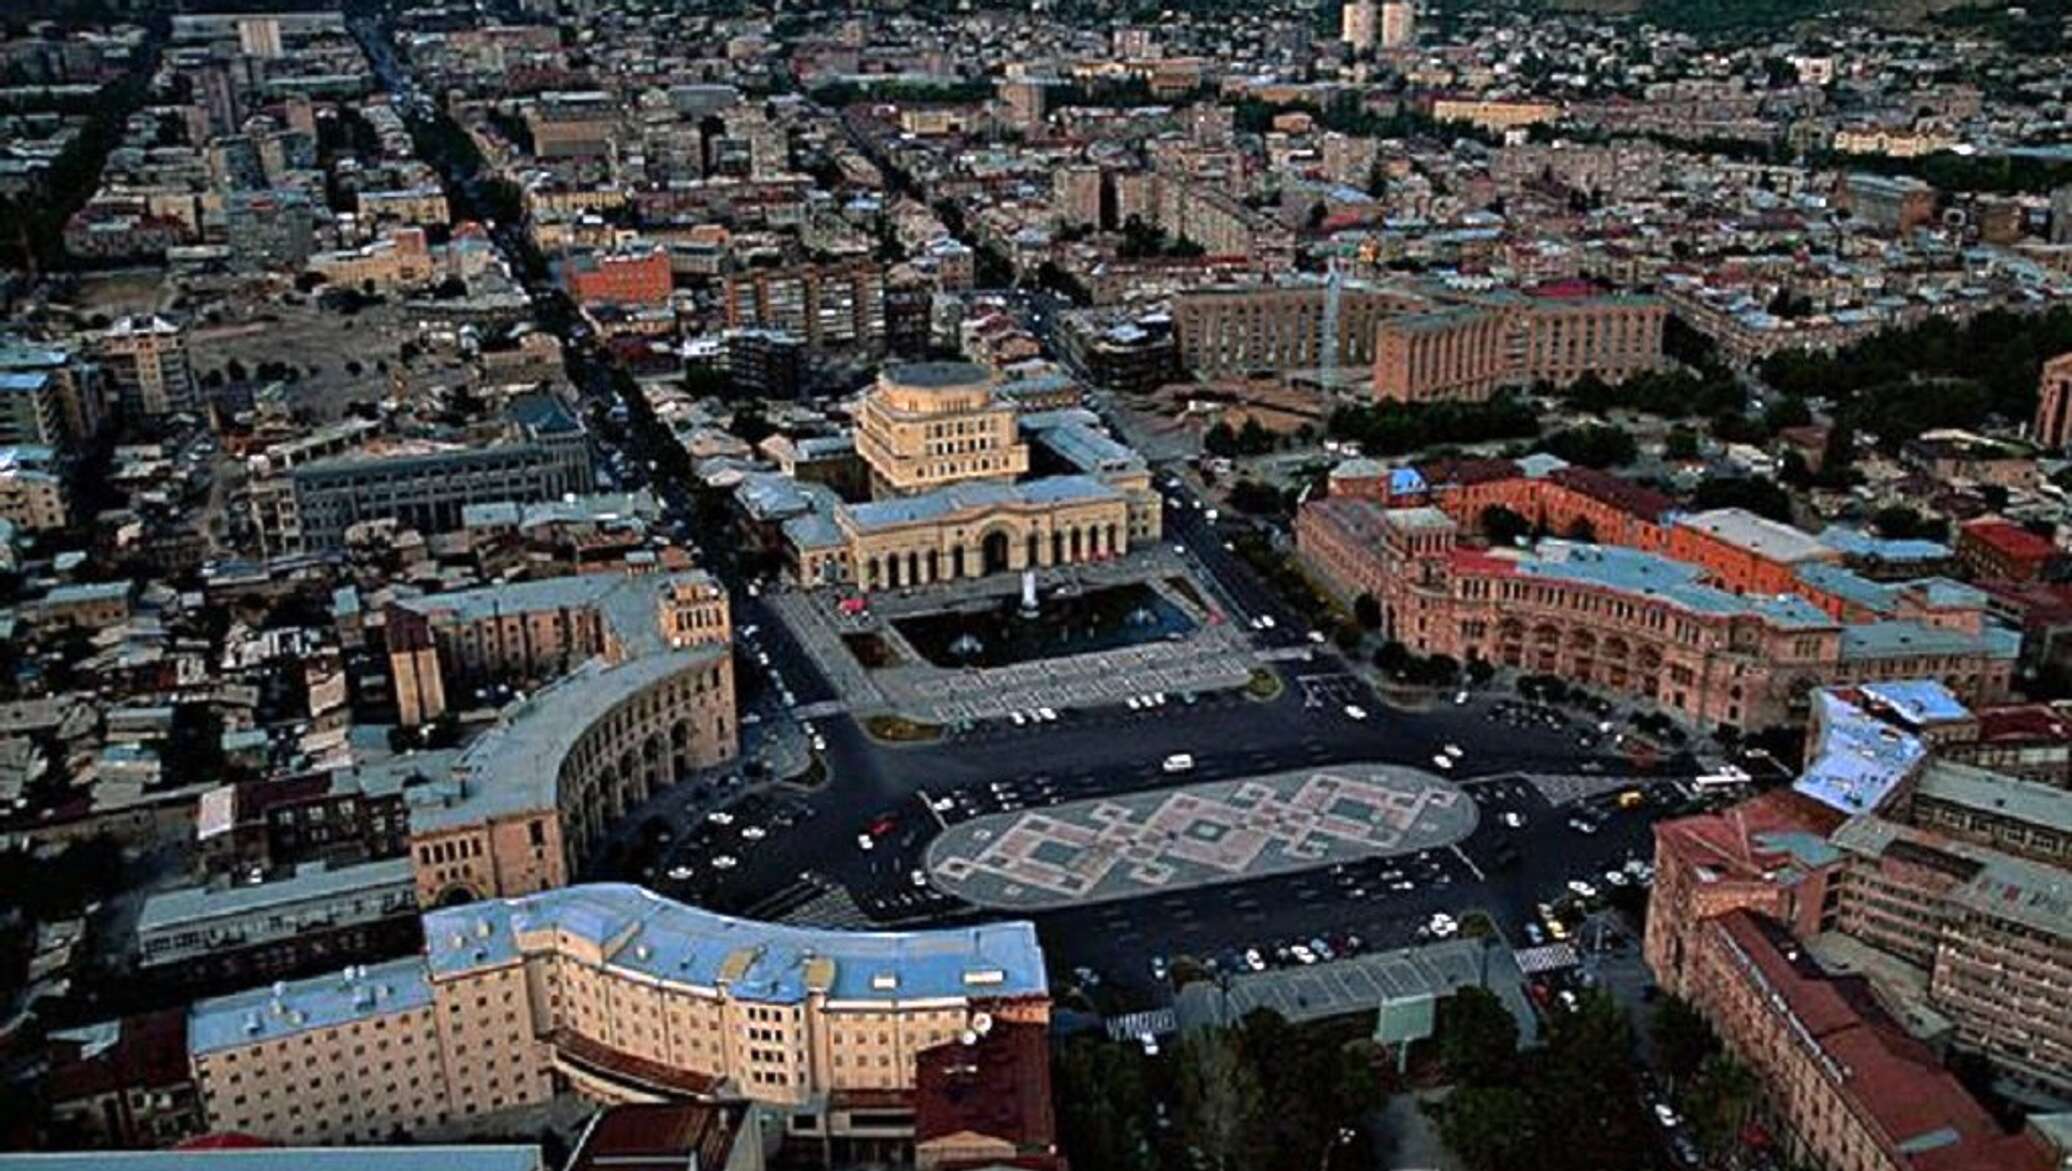 Ереван раньше. Площадь Республики Ереван. Площадь Республики Ереван вид сверху. Республиканская площадь Еревана. Ереван центр города.